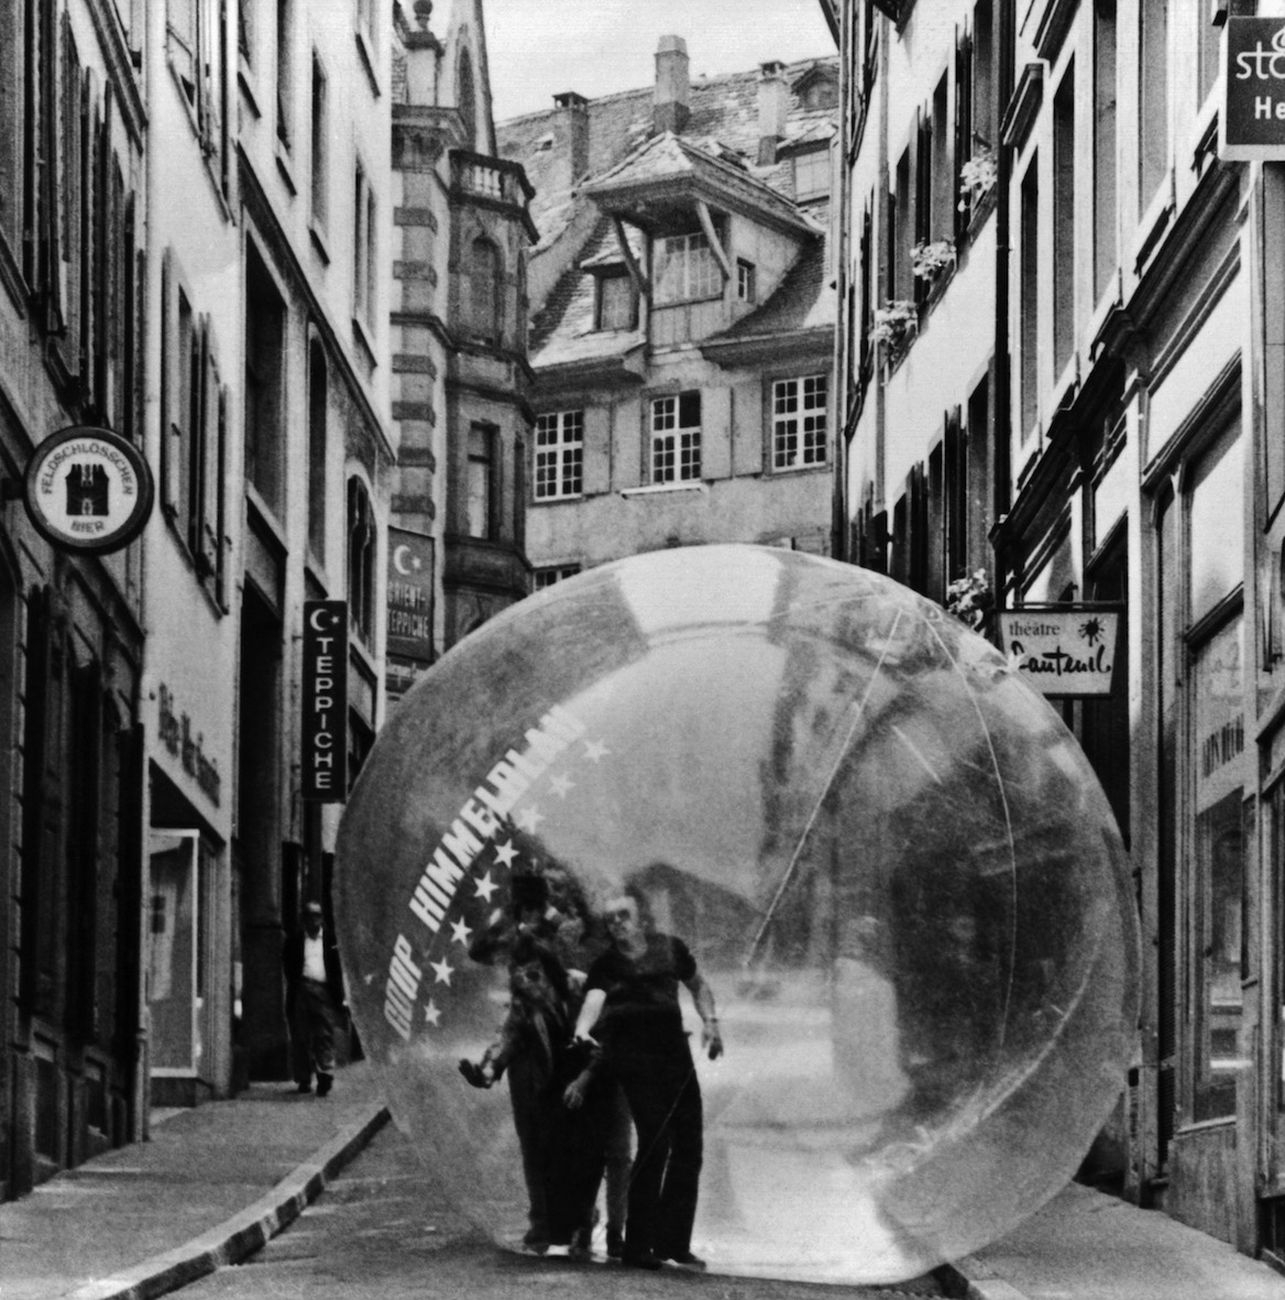 Coop Himmelb(l)au, Restless Sphere, Basilea, 1971. Photo © Peter Schnetz